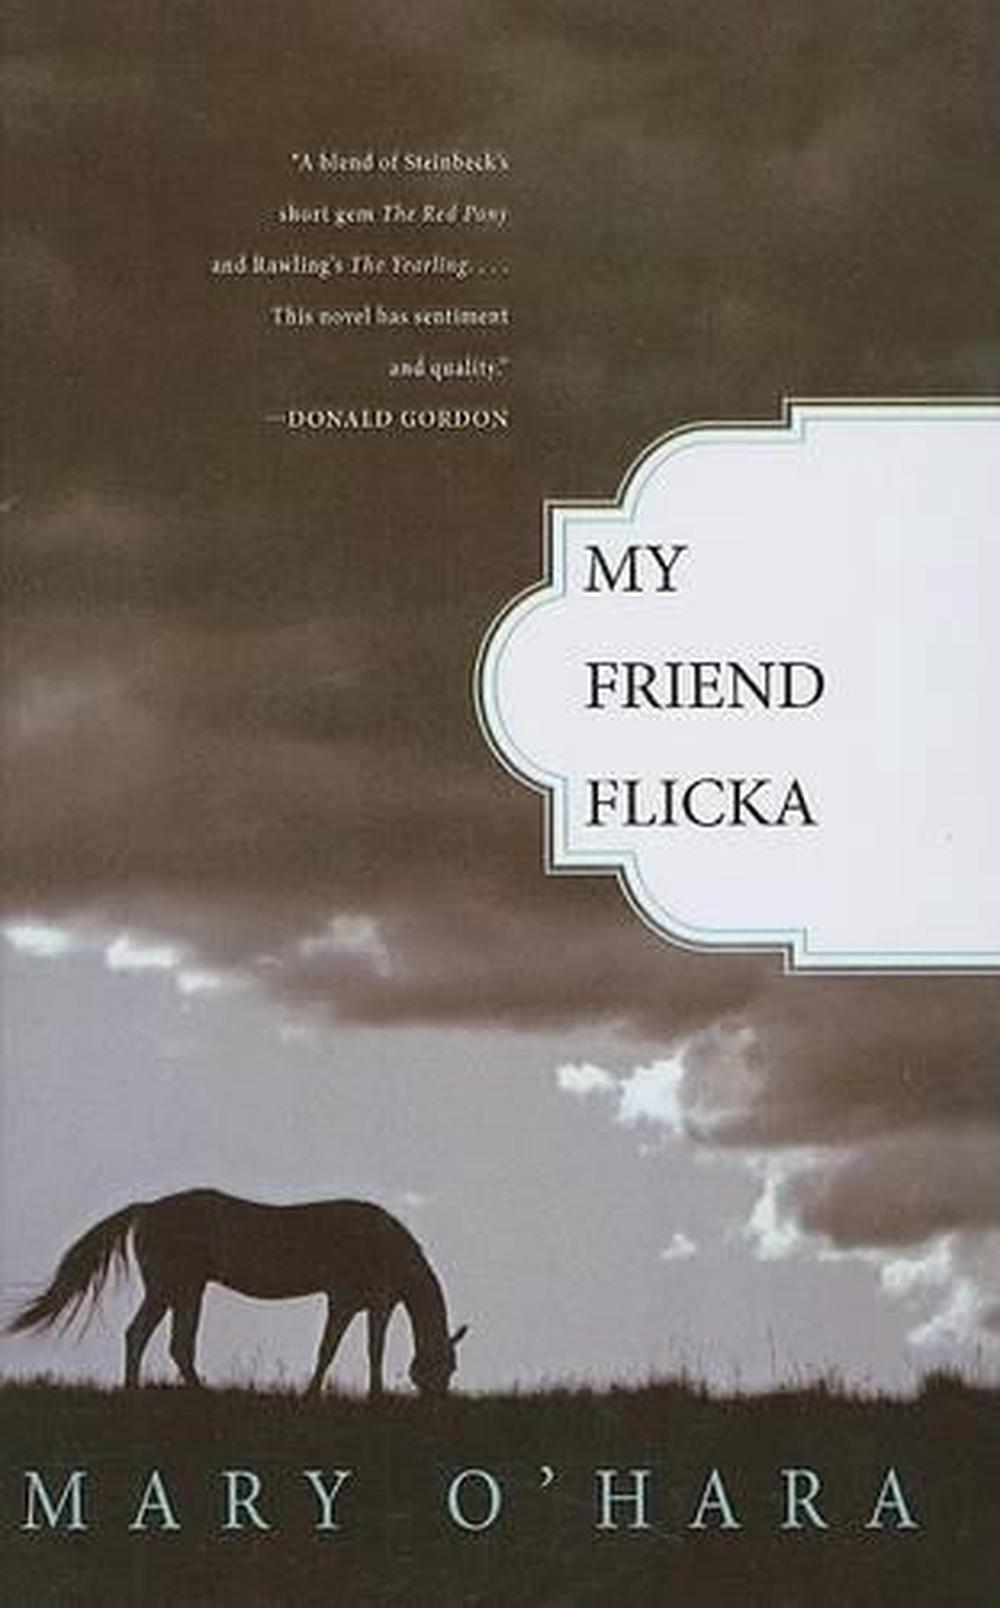 my friend flicka book